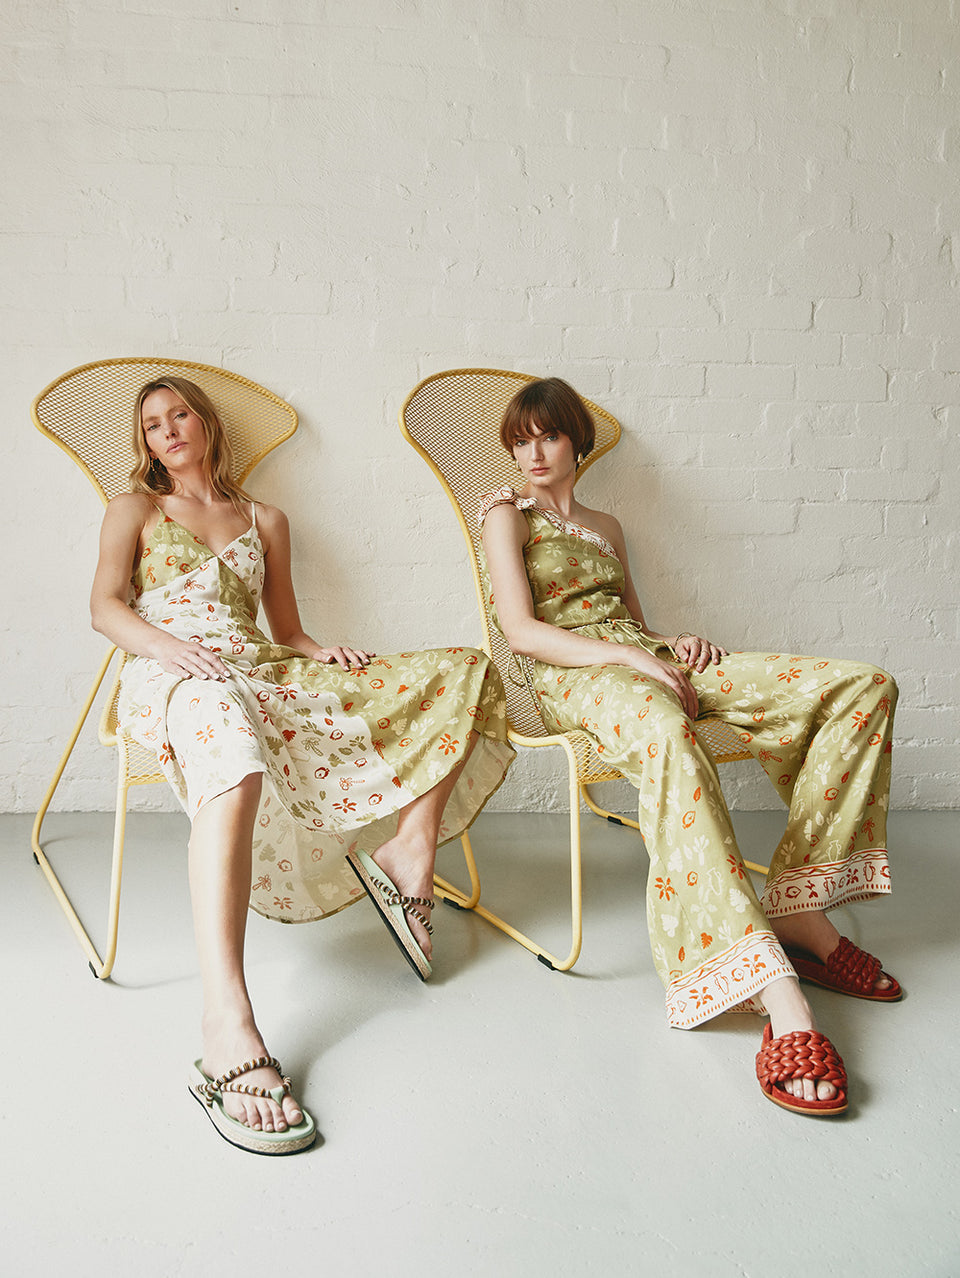 Models wearing KIVARI Salome Slip Dress, Top & Pants, sitting in chairs